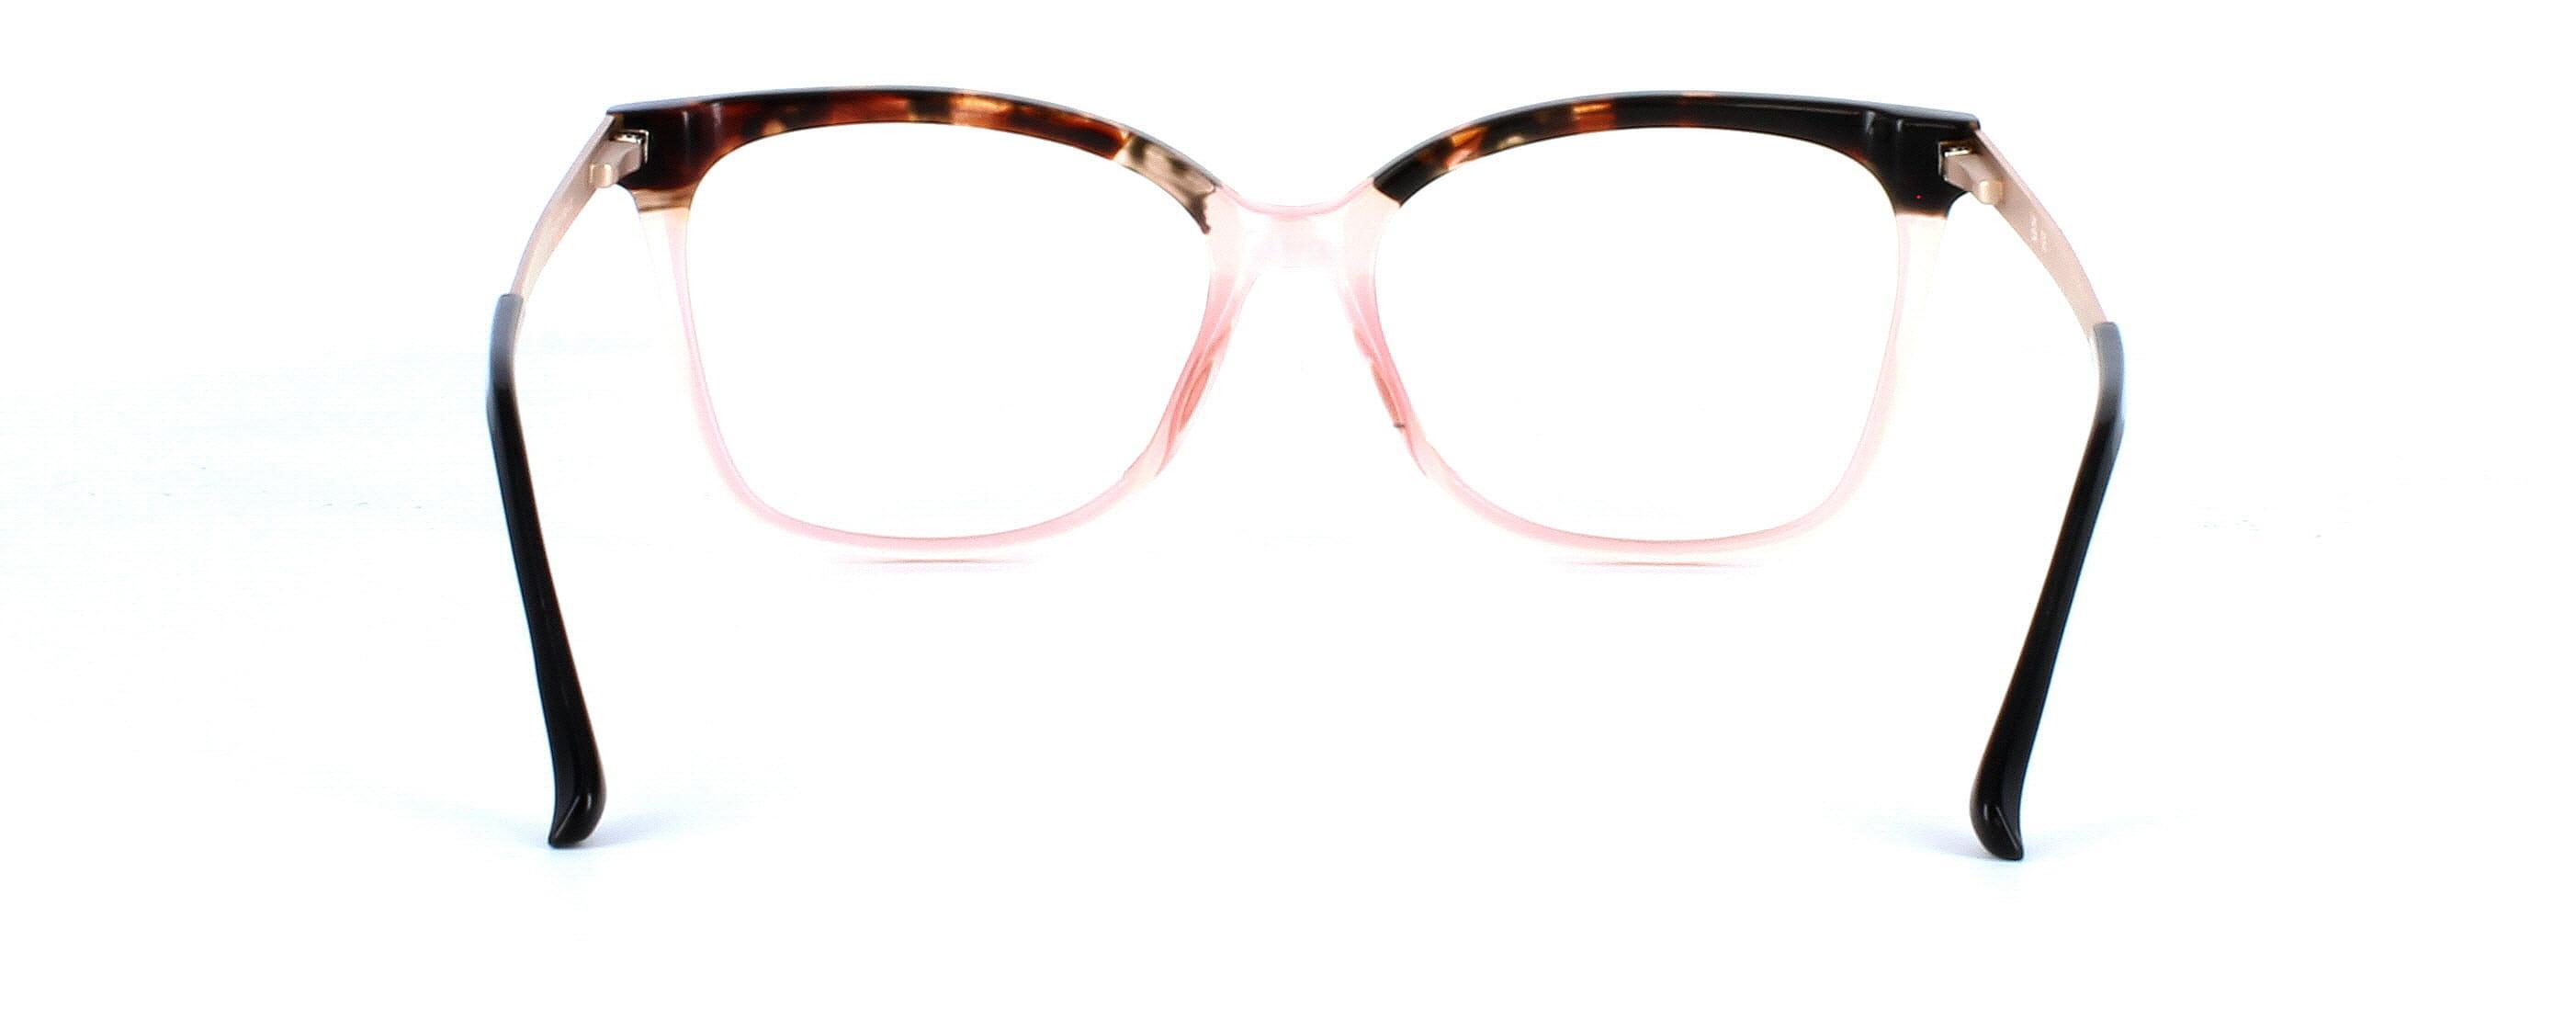 Carina - ladies 2-tone plastic glasses with square shaped lenses - image view 3